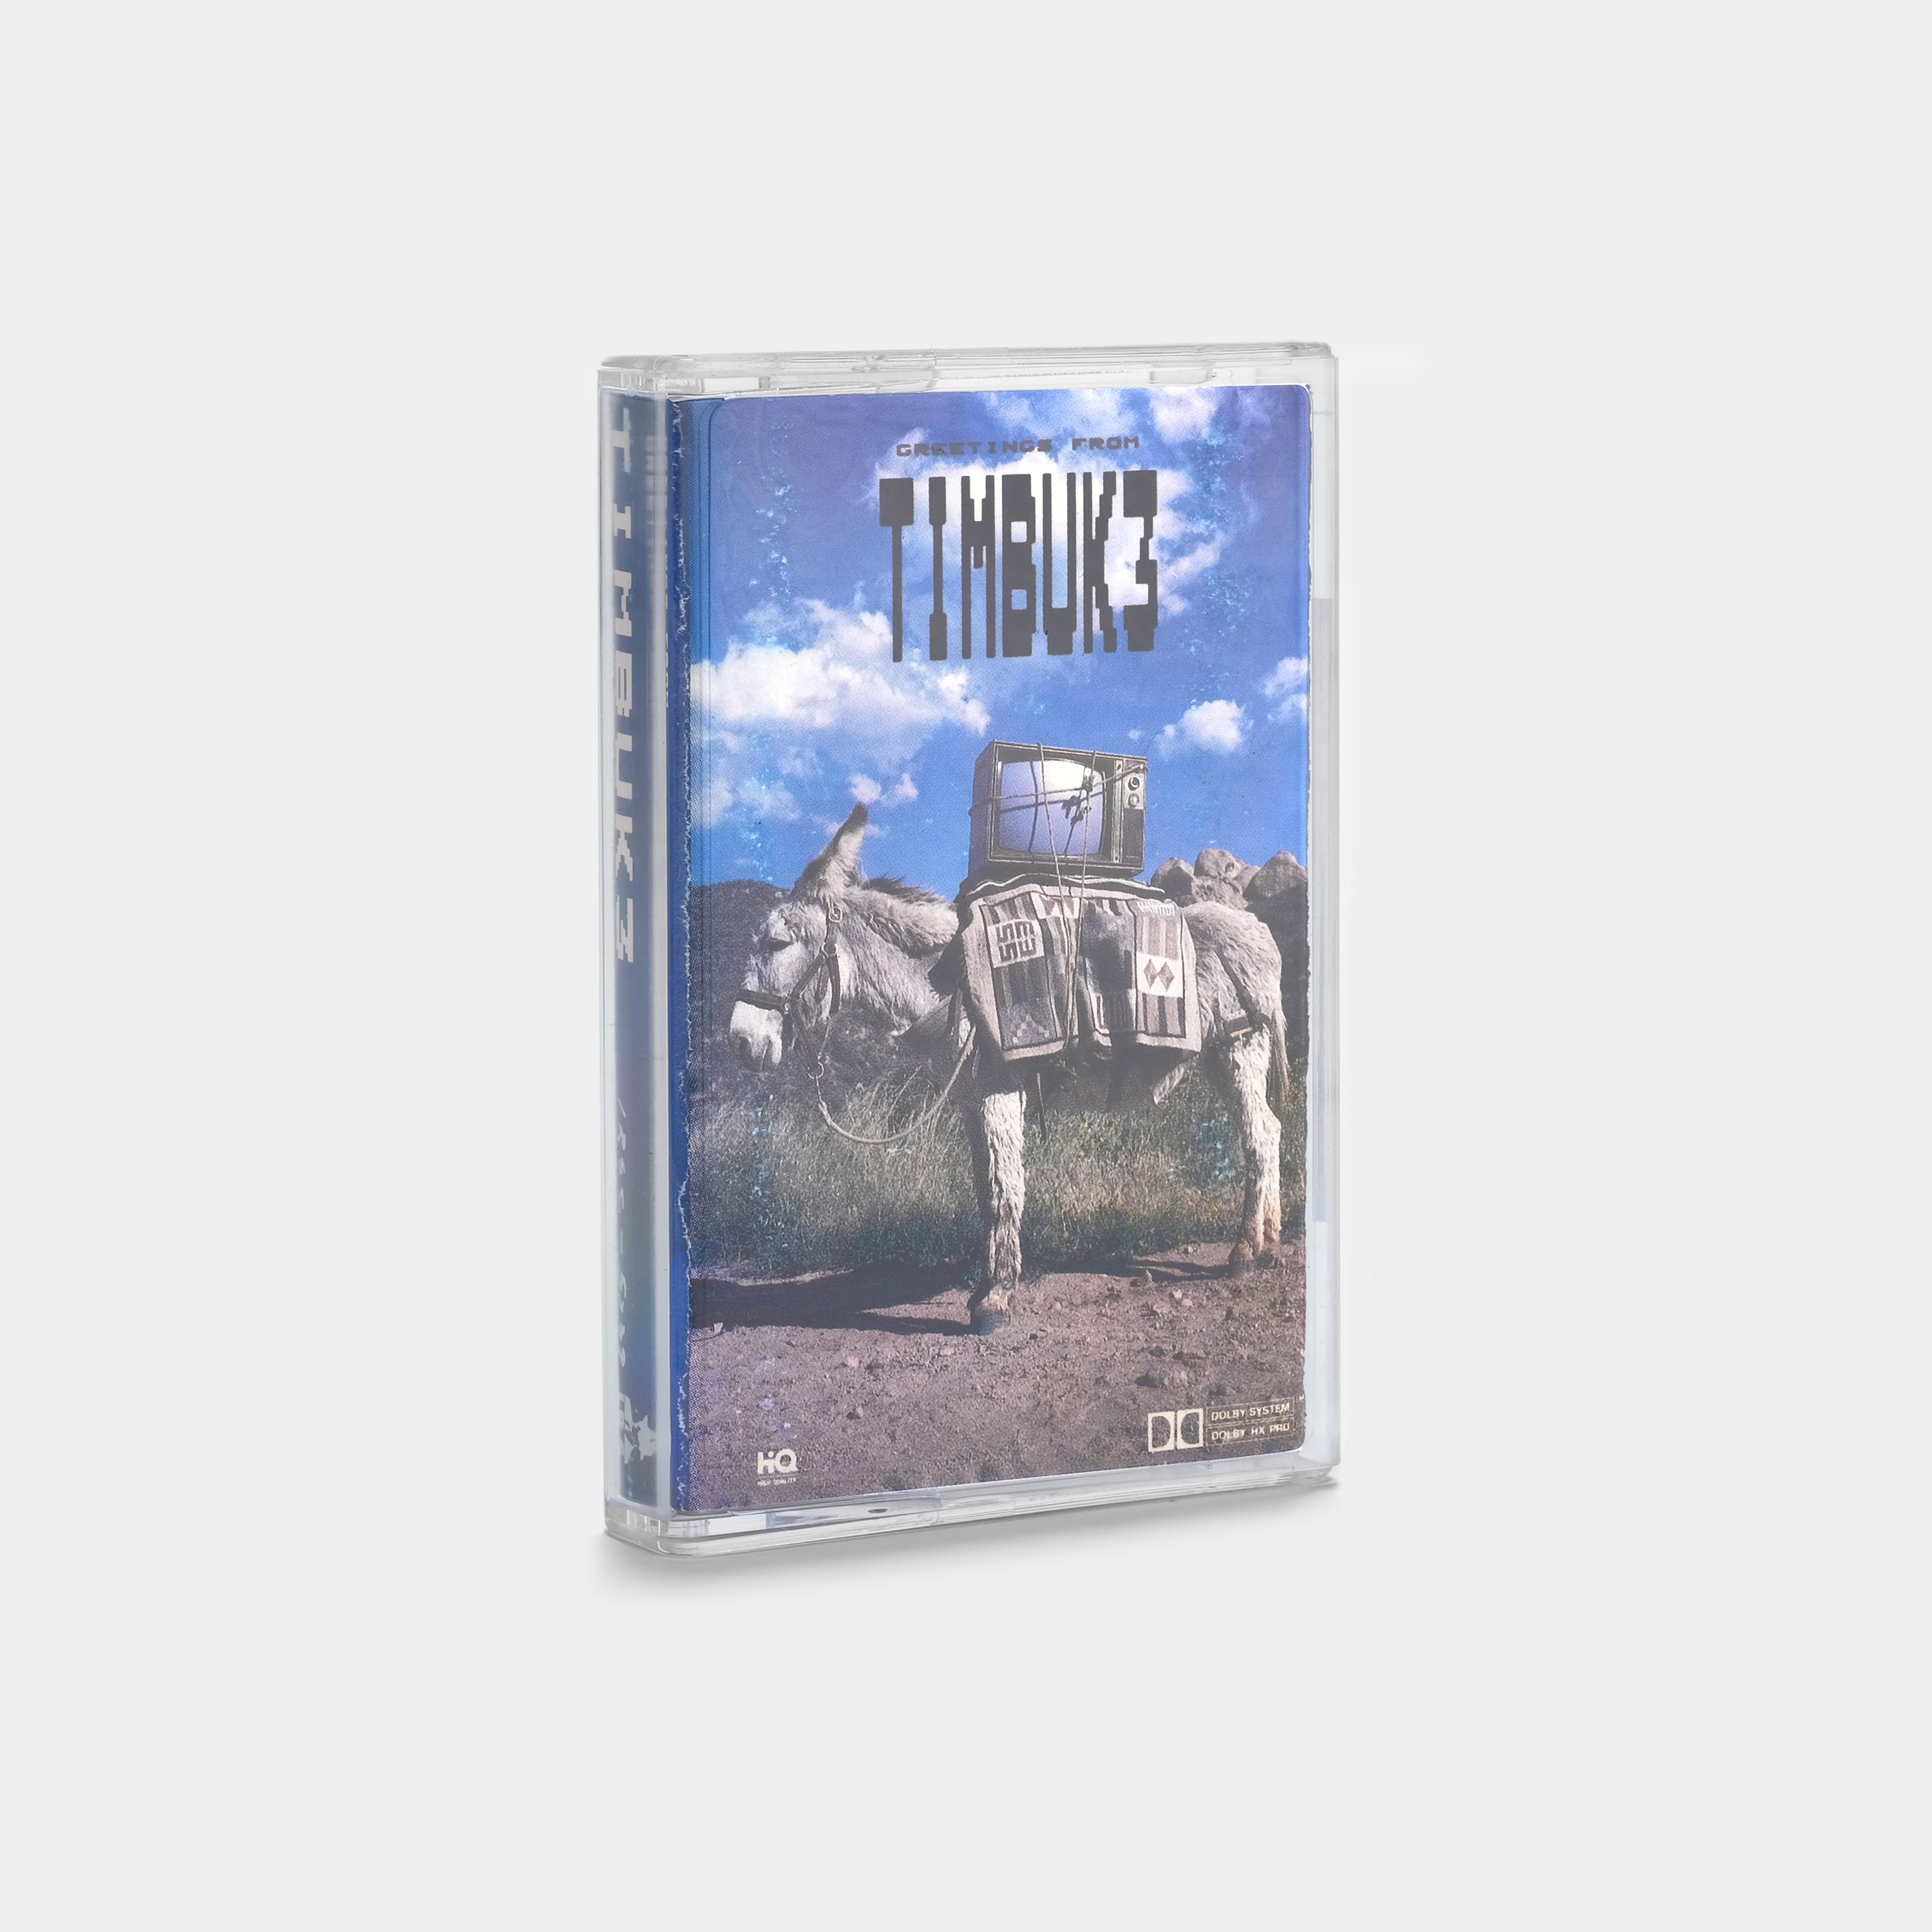 Timbuk 3 - Greetings From Timbuk 3 Cassette Tape